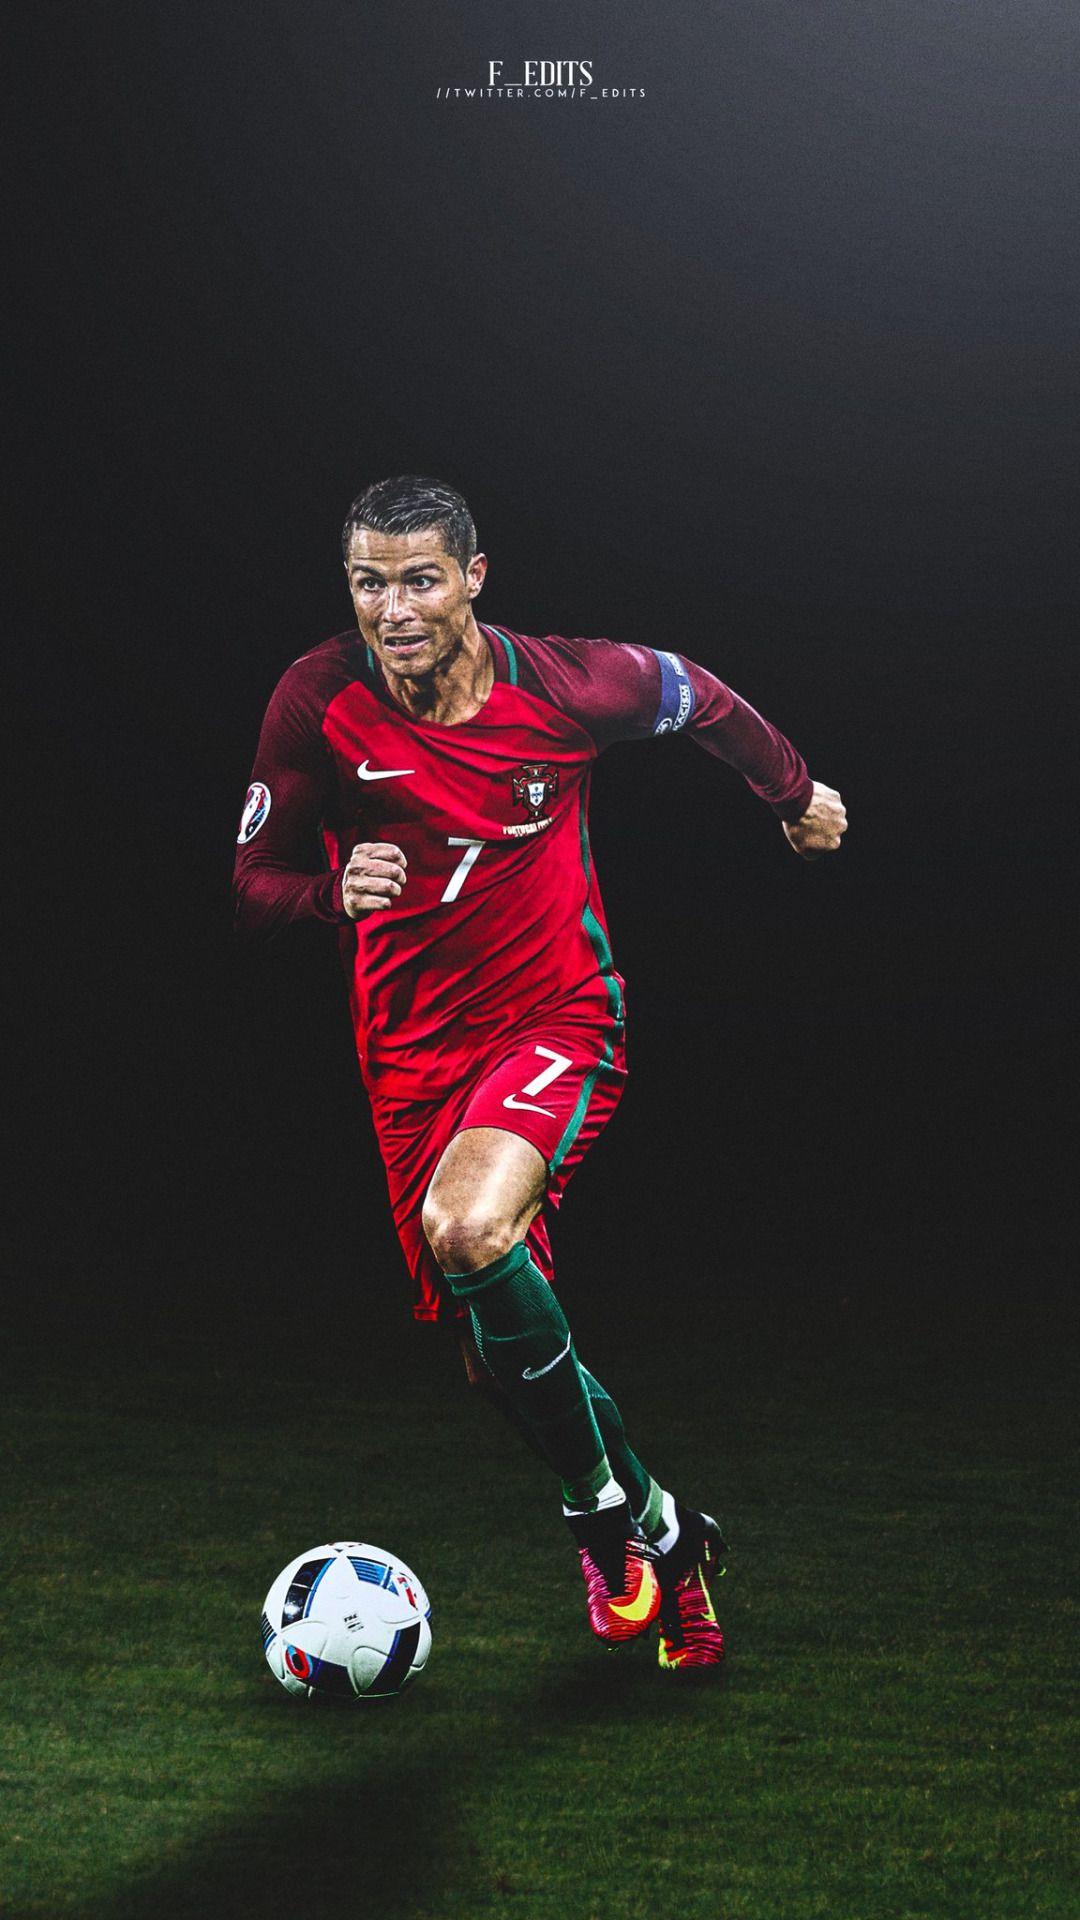 UEFA TEAM OF THE YEAR. Striker. Cristiano Ronaldo mobile wallpaper. Ronaldo wallpaper, Cristiano ronaldo wallpaper, Cristiano ronaldo cr7